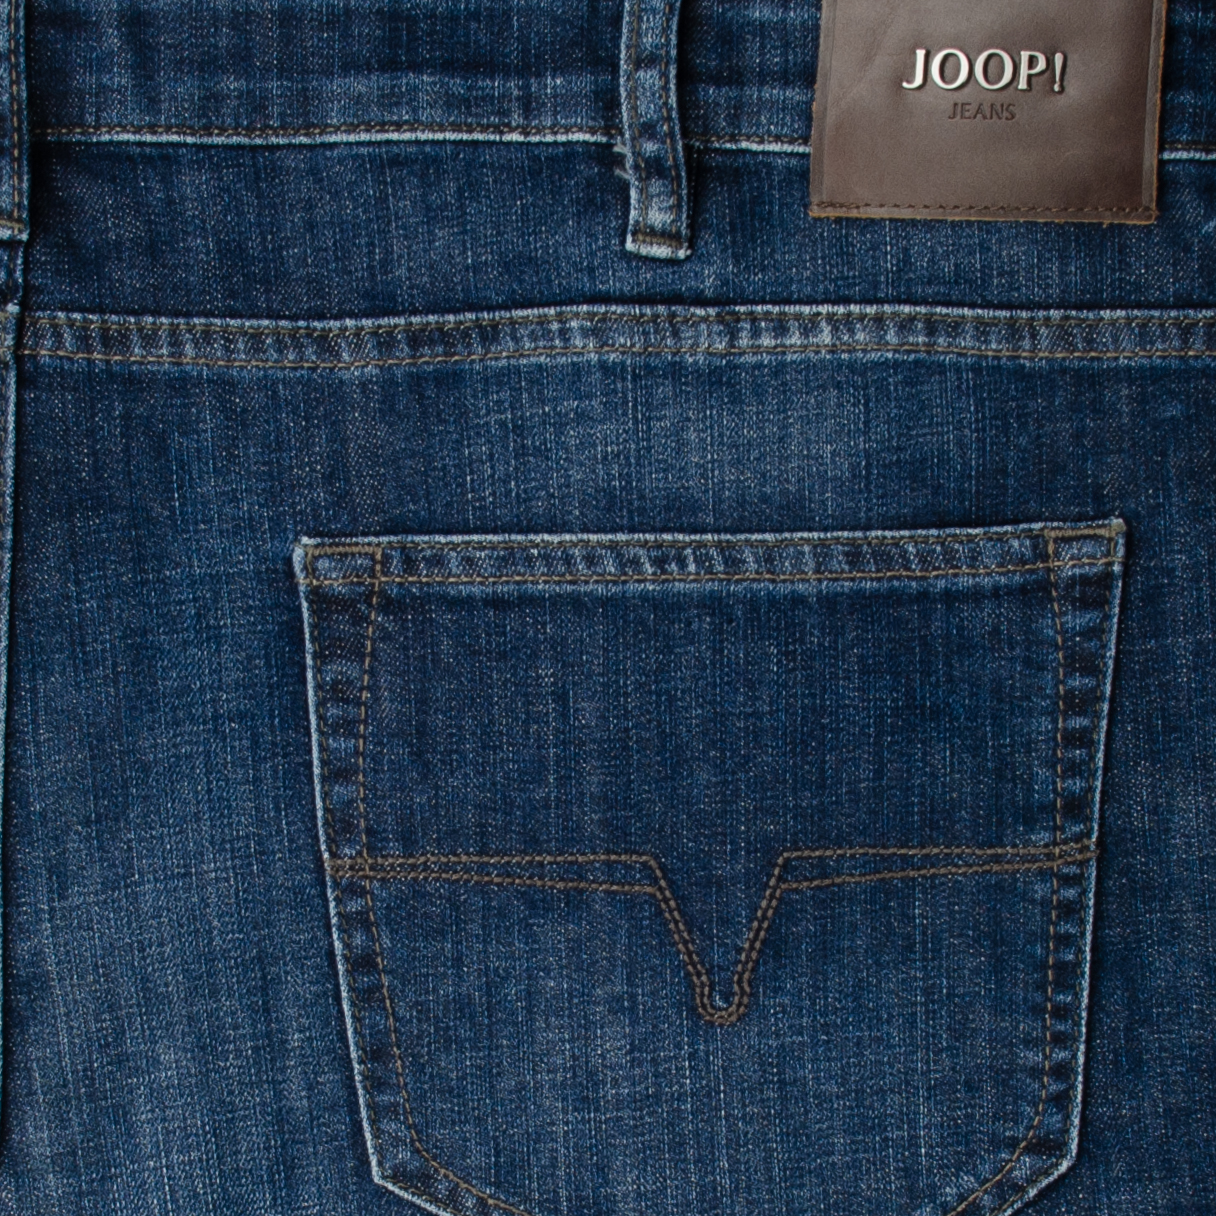 joop jeans